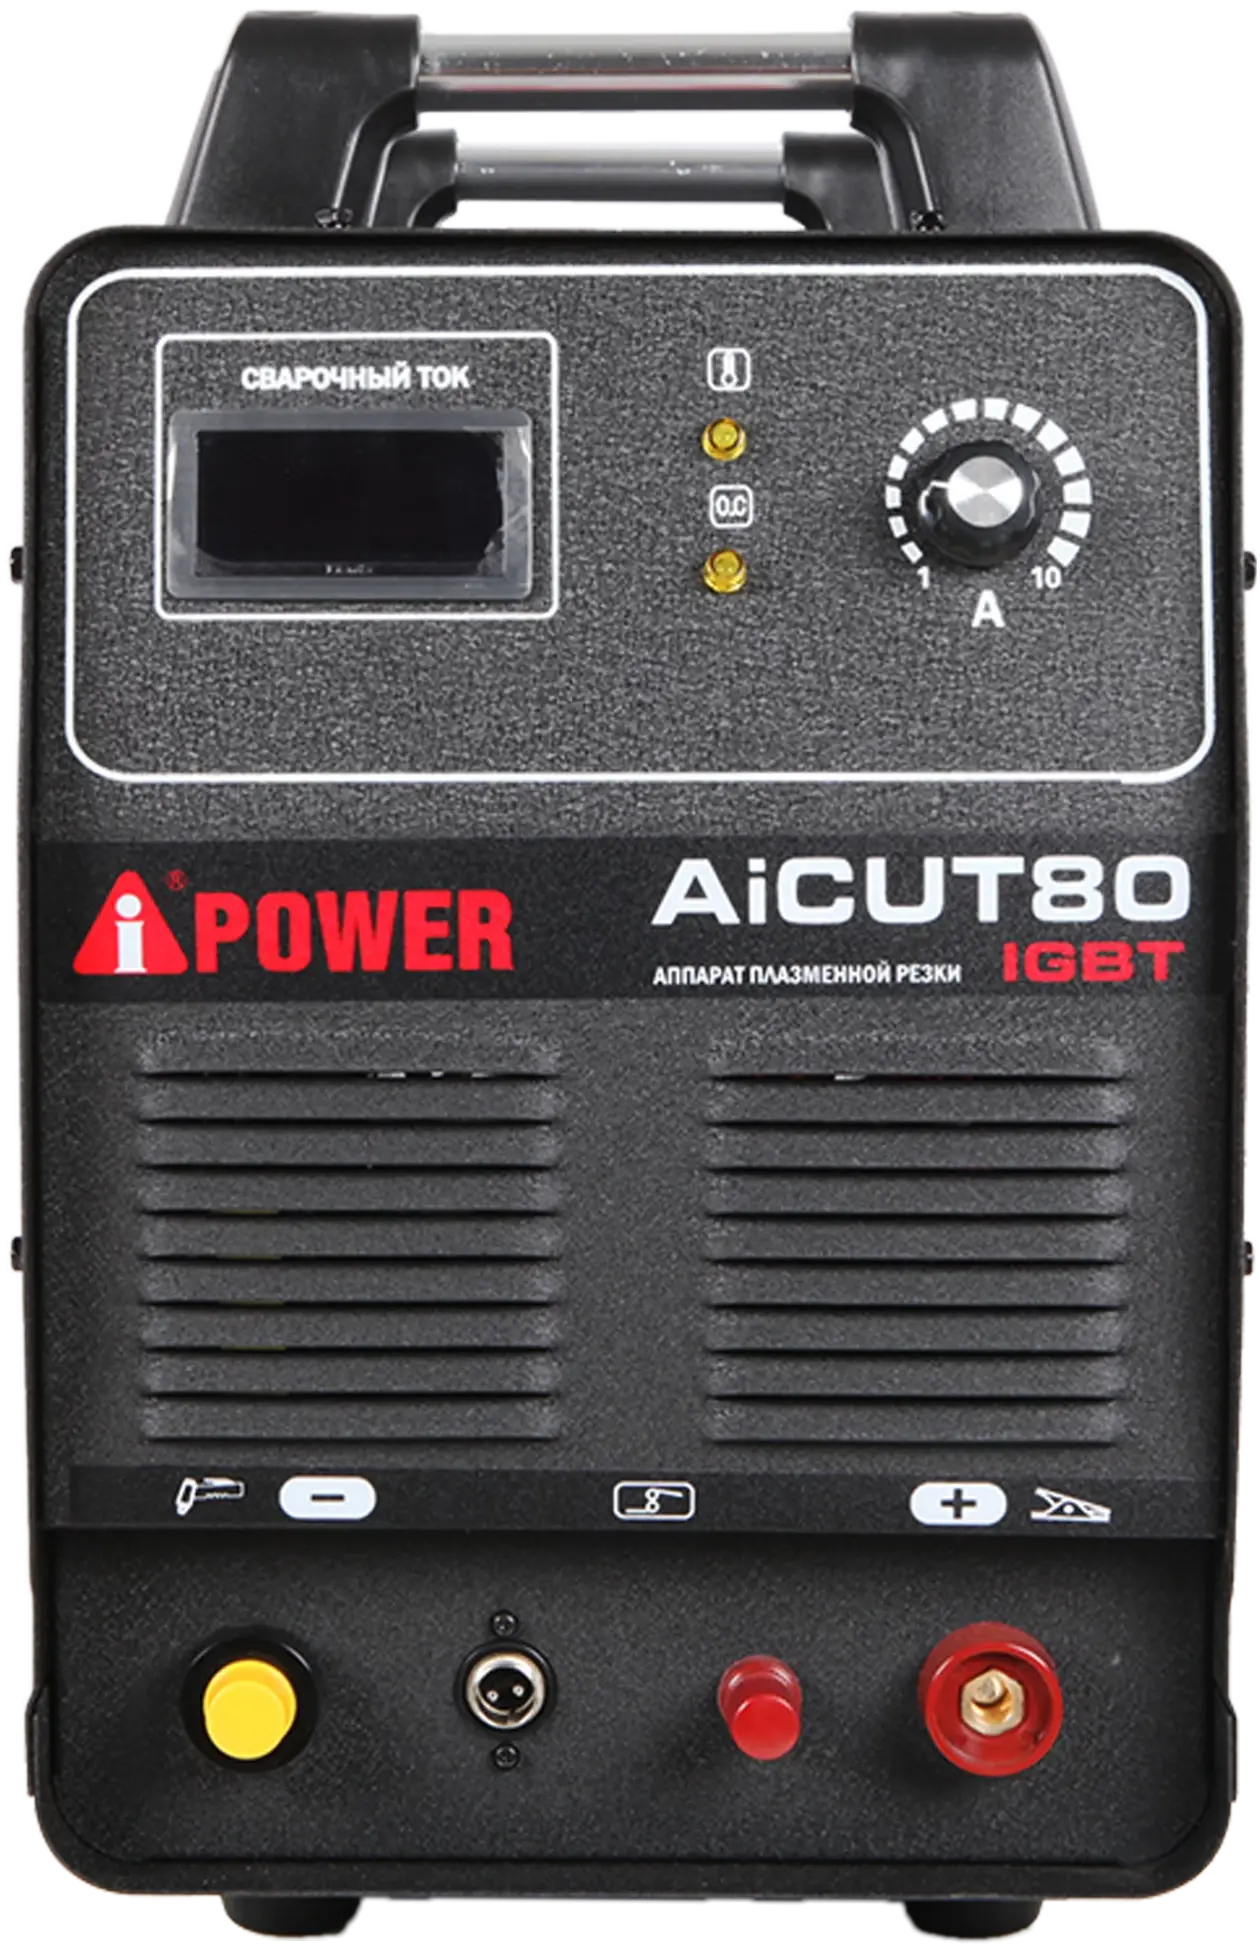 Аппарат плазменной резки A-IPOWER AICUT80